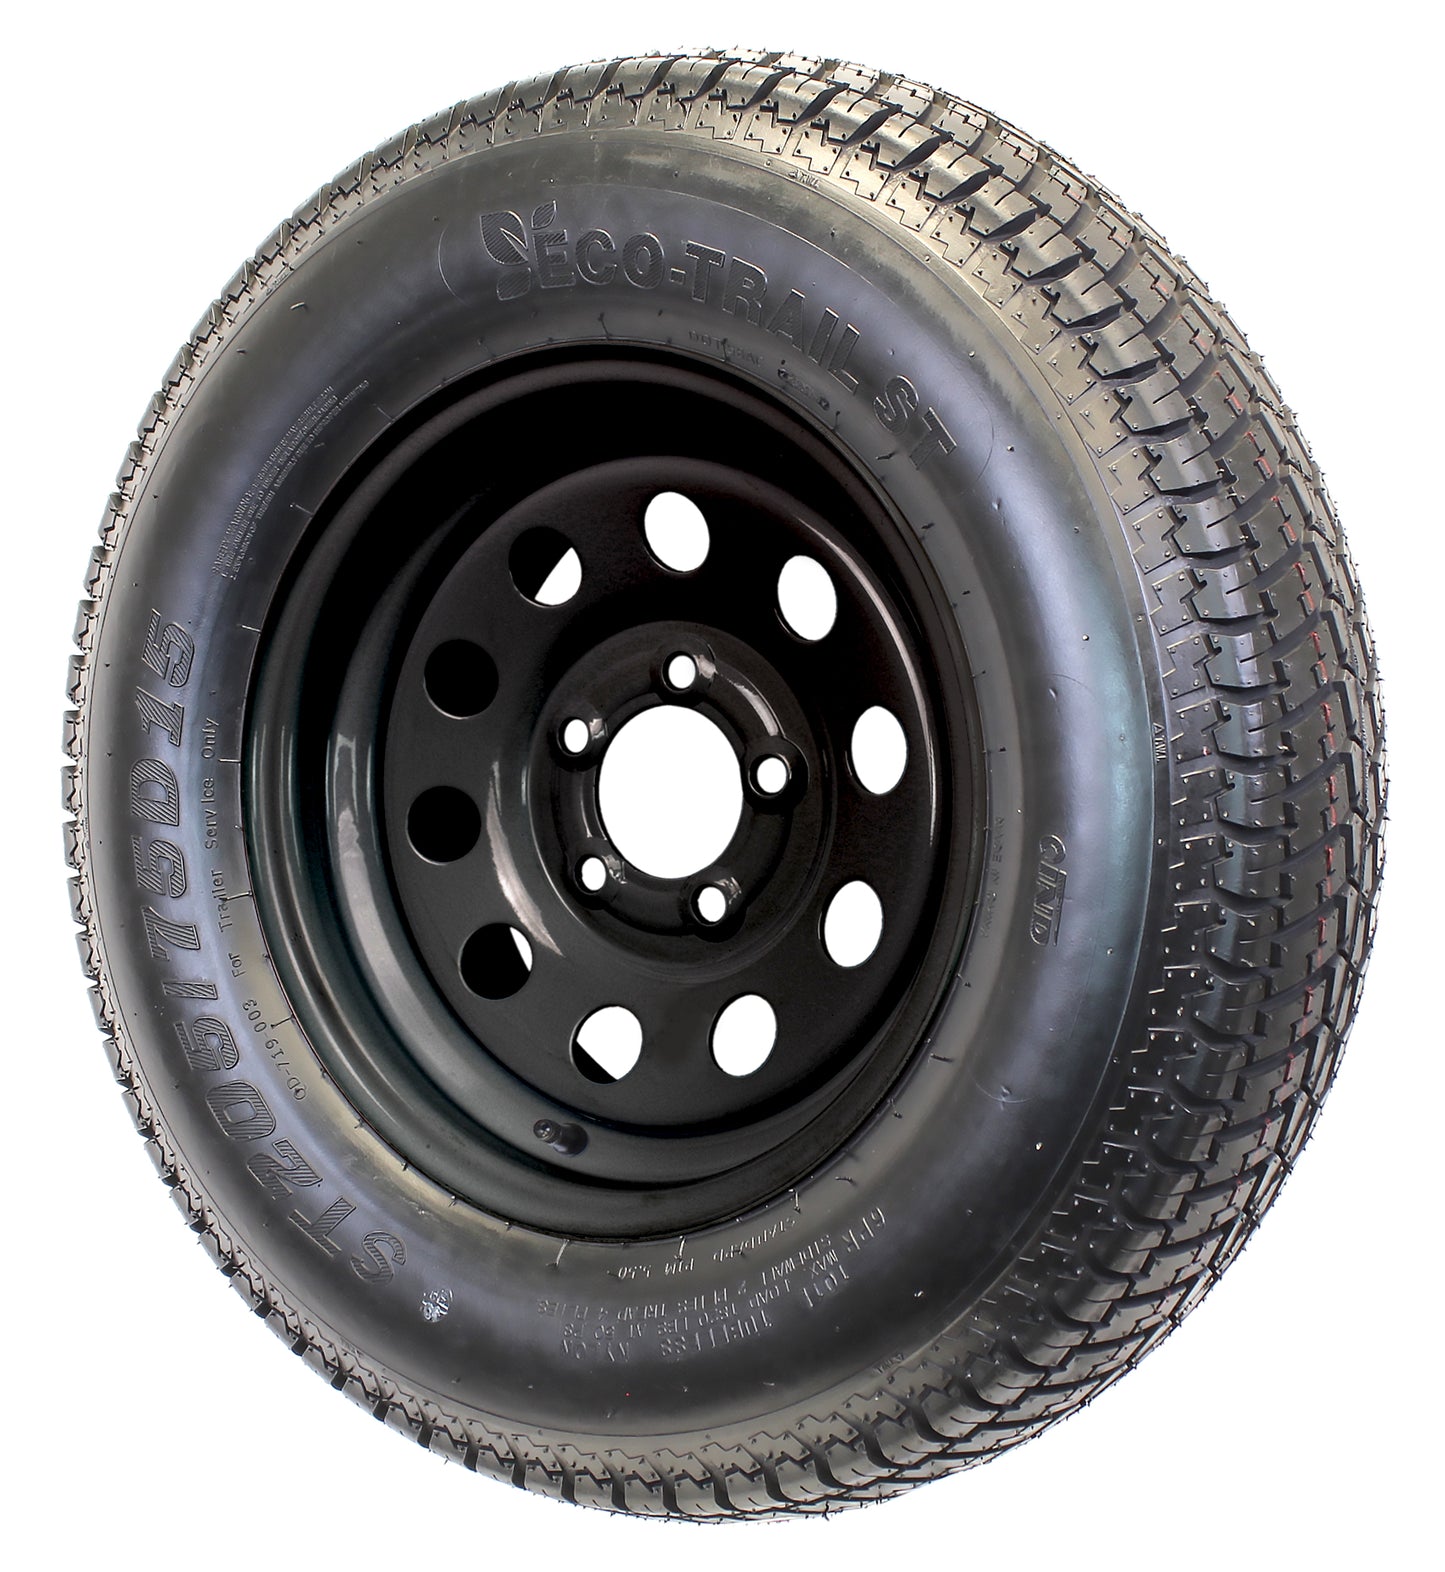 Trailer Tire On Black Wheel Modular Rim ST205/75D15 LRC 5 Lug On 4.5 15 x 5